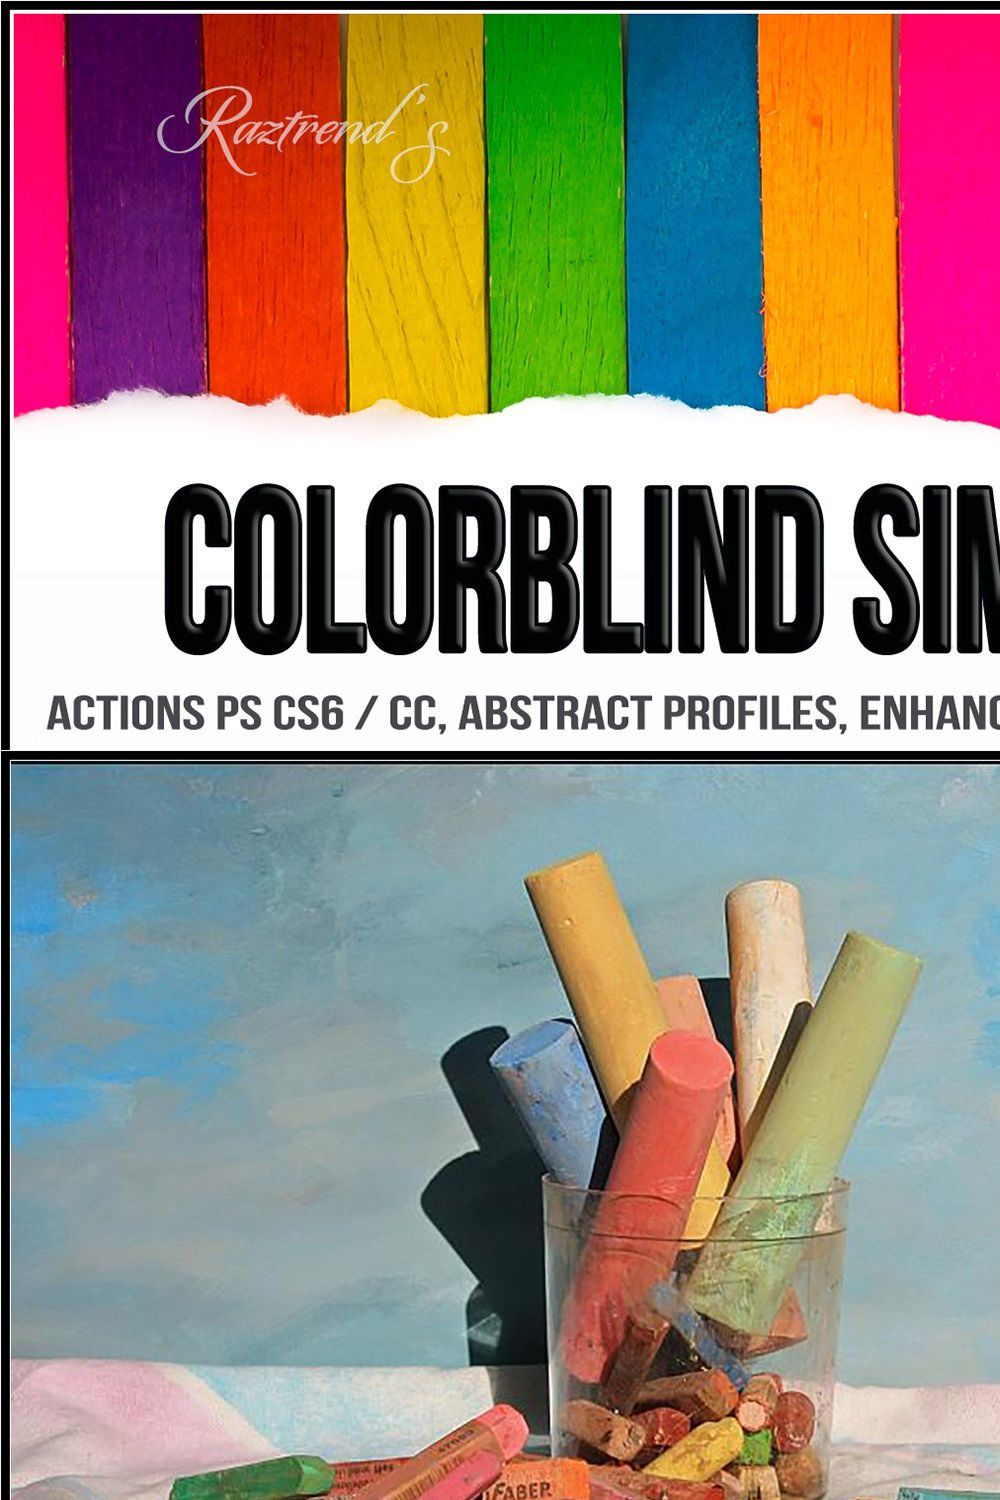 Colorblind Simulator Kit pinterest preview image.